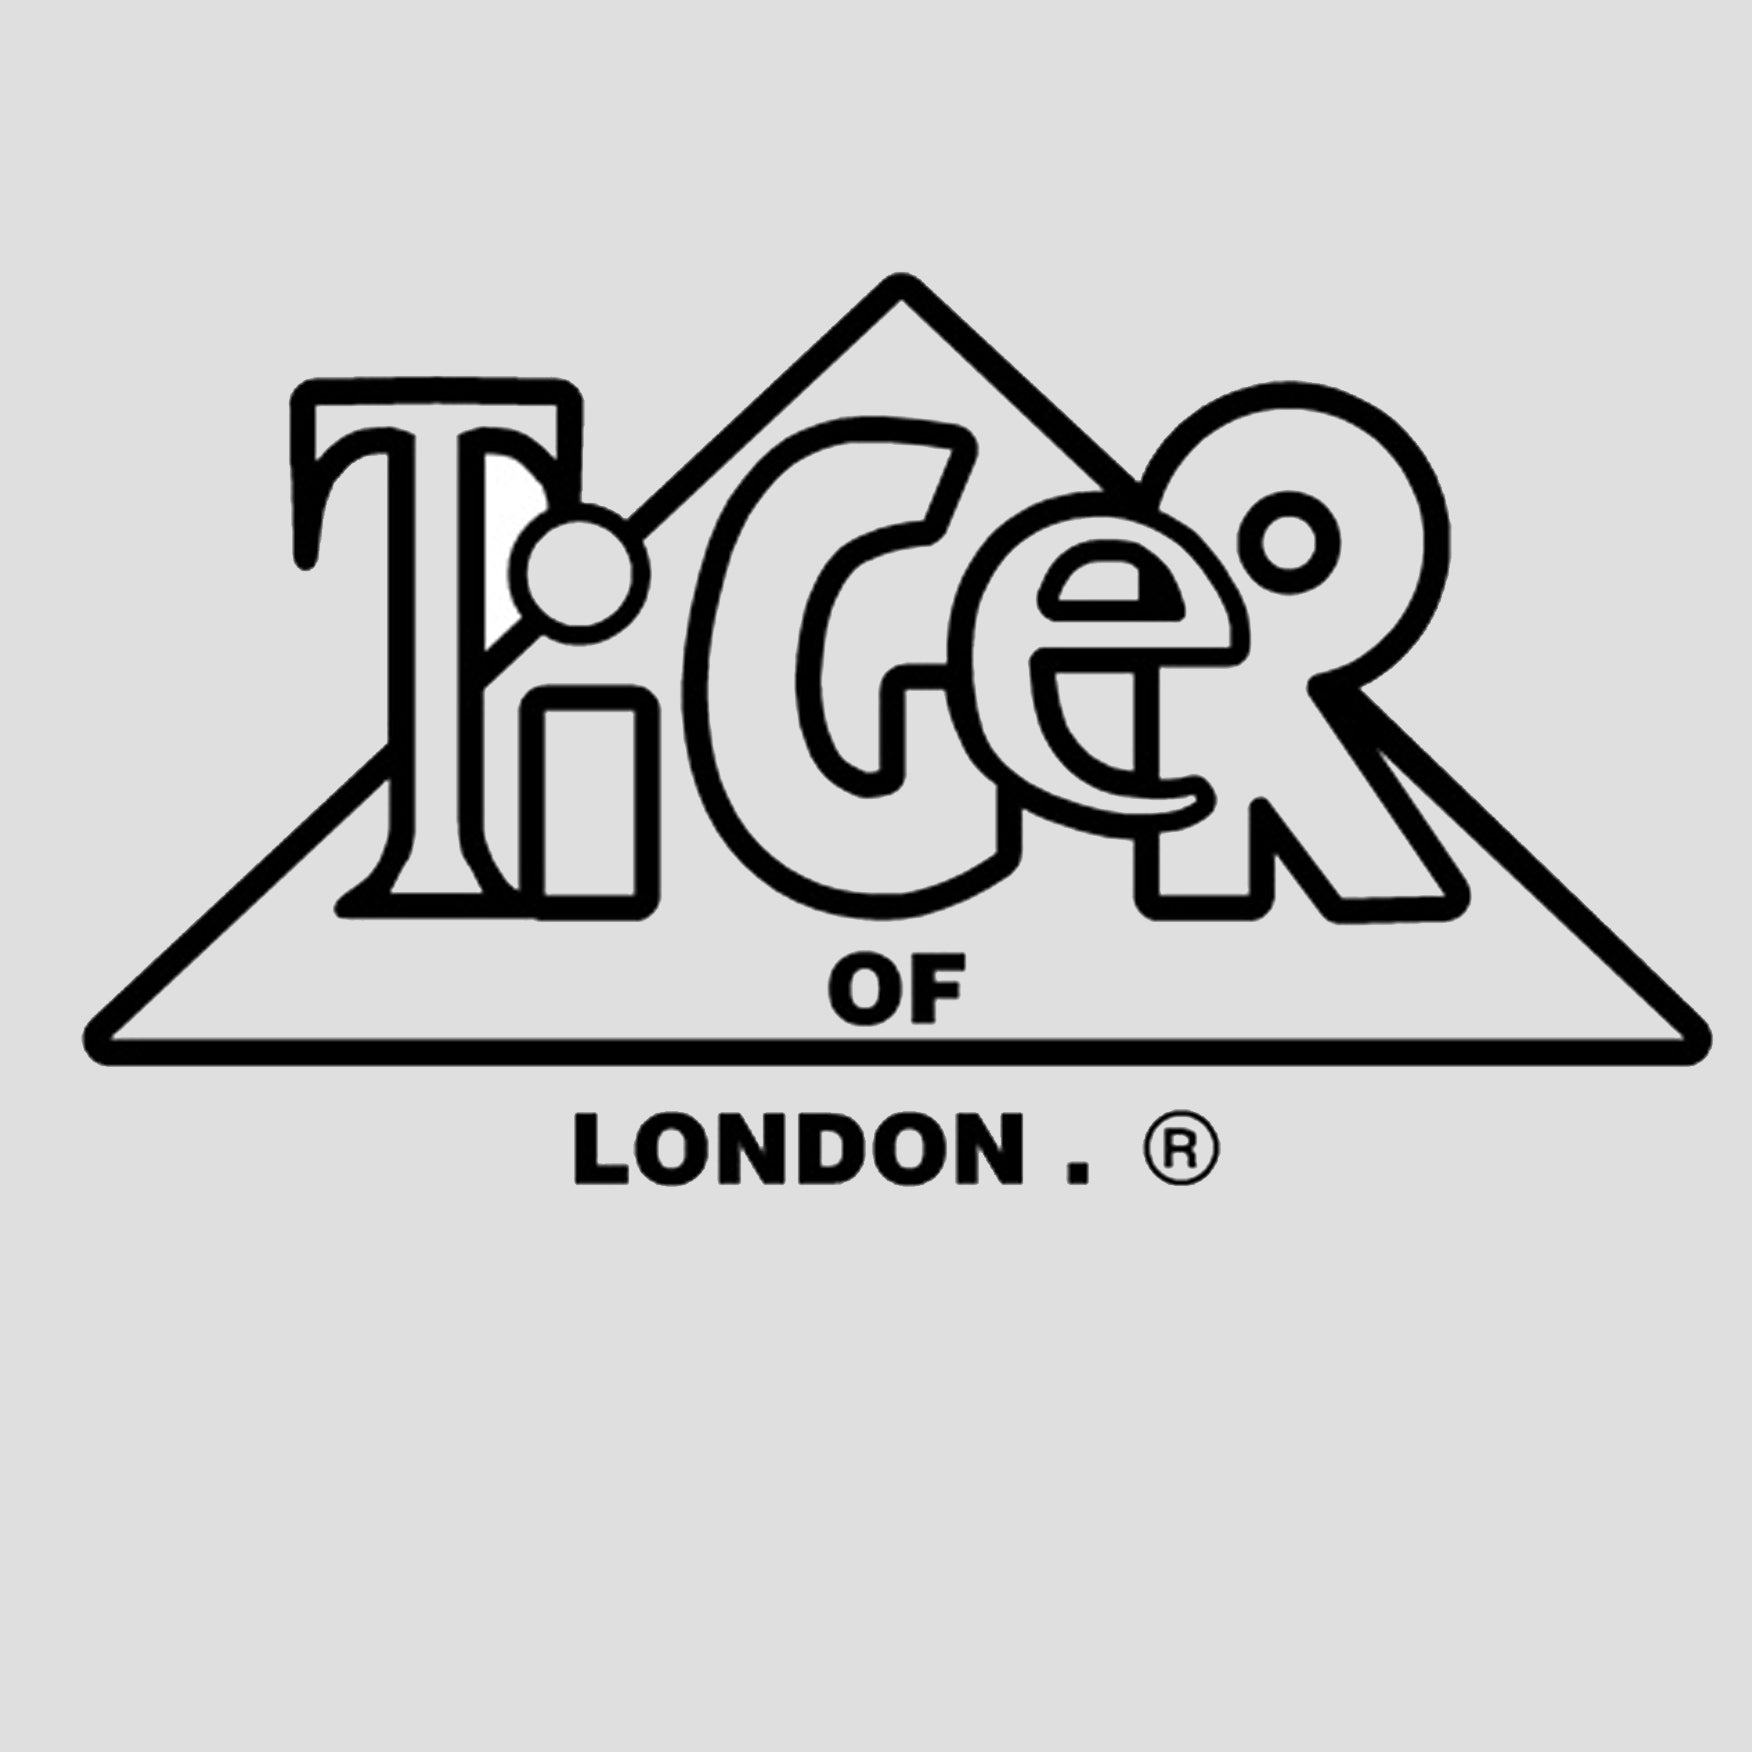 TIGER OF LONDON